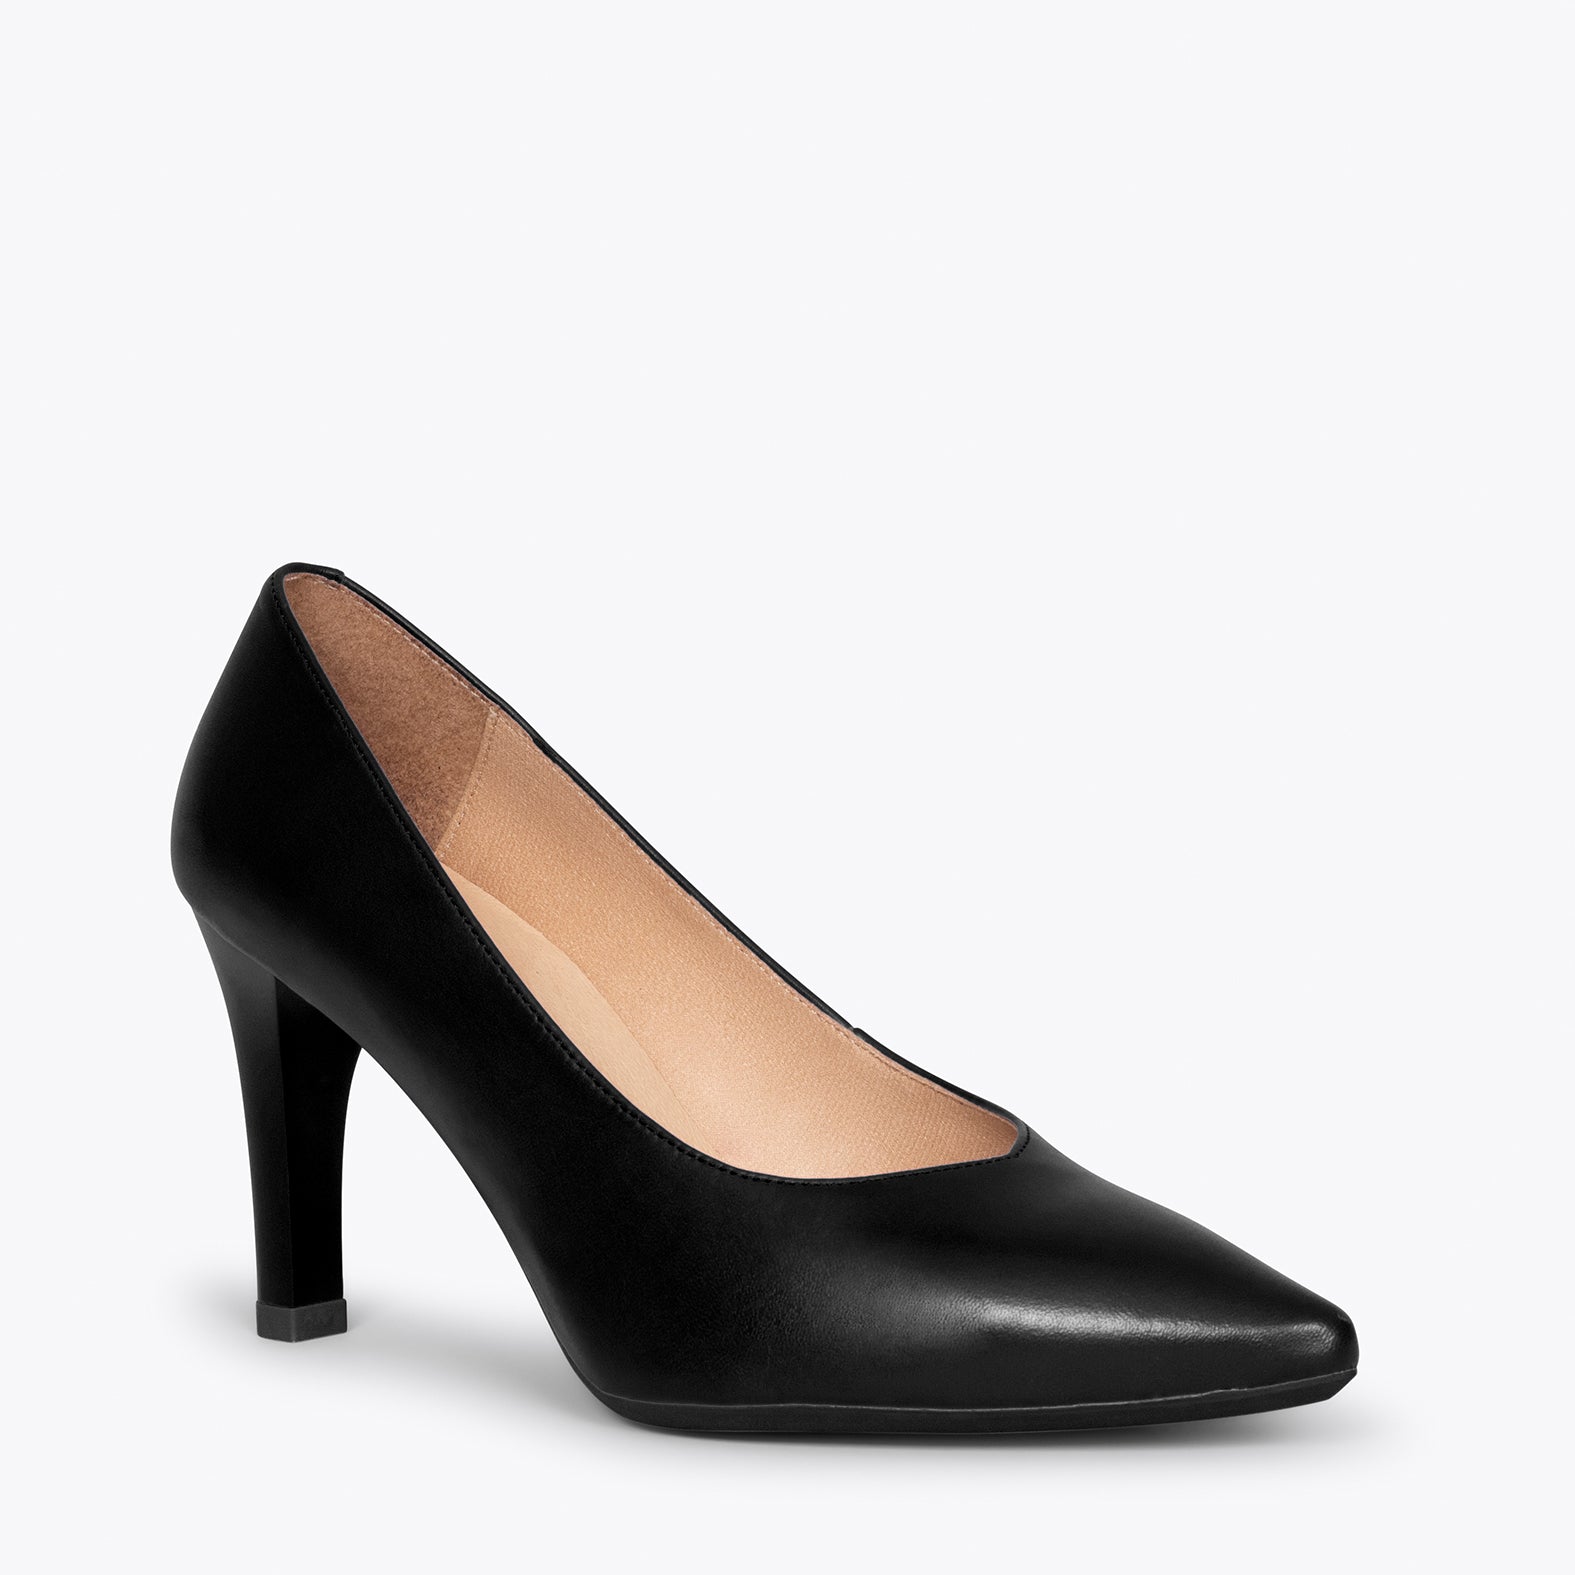 GLAM – BLACK elegant high heels